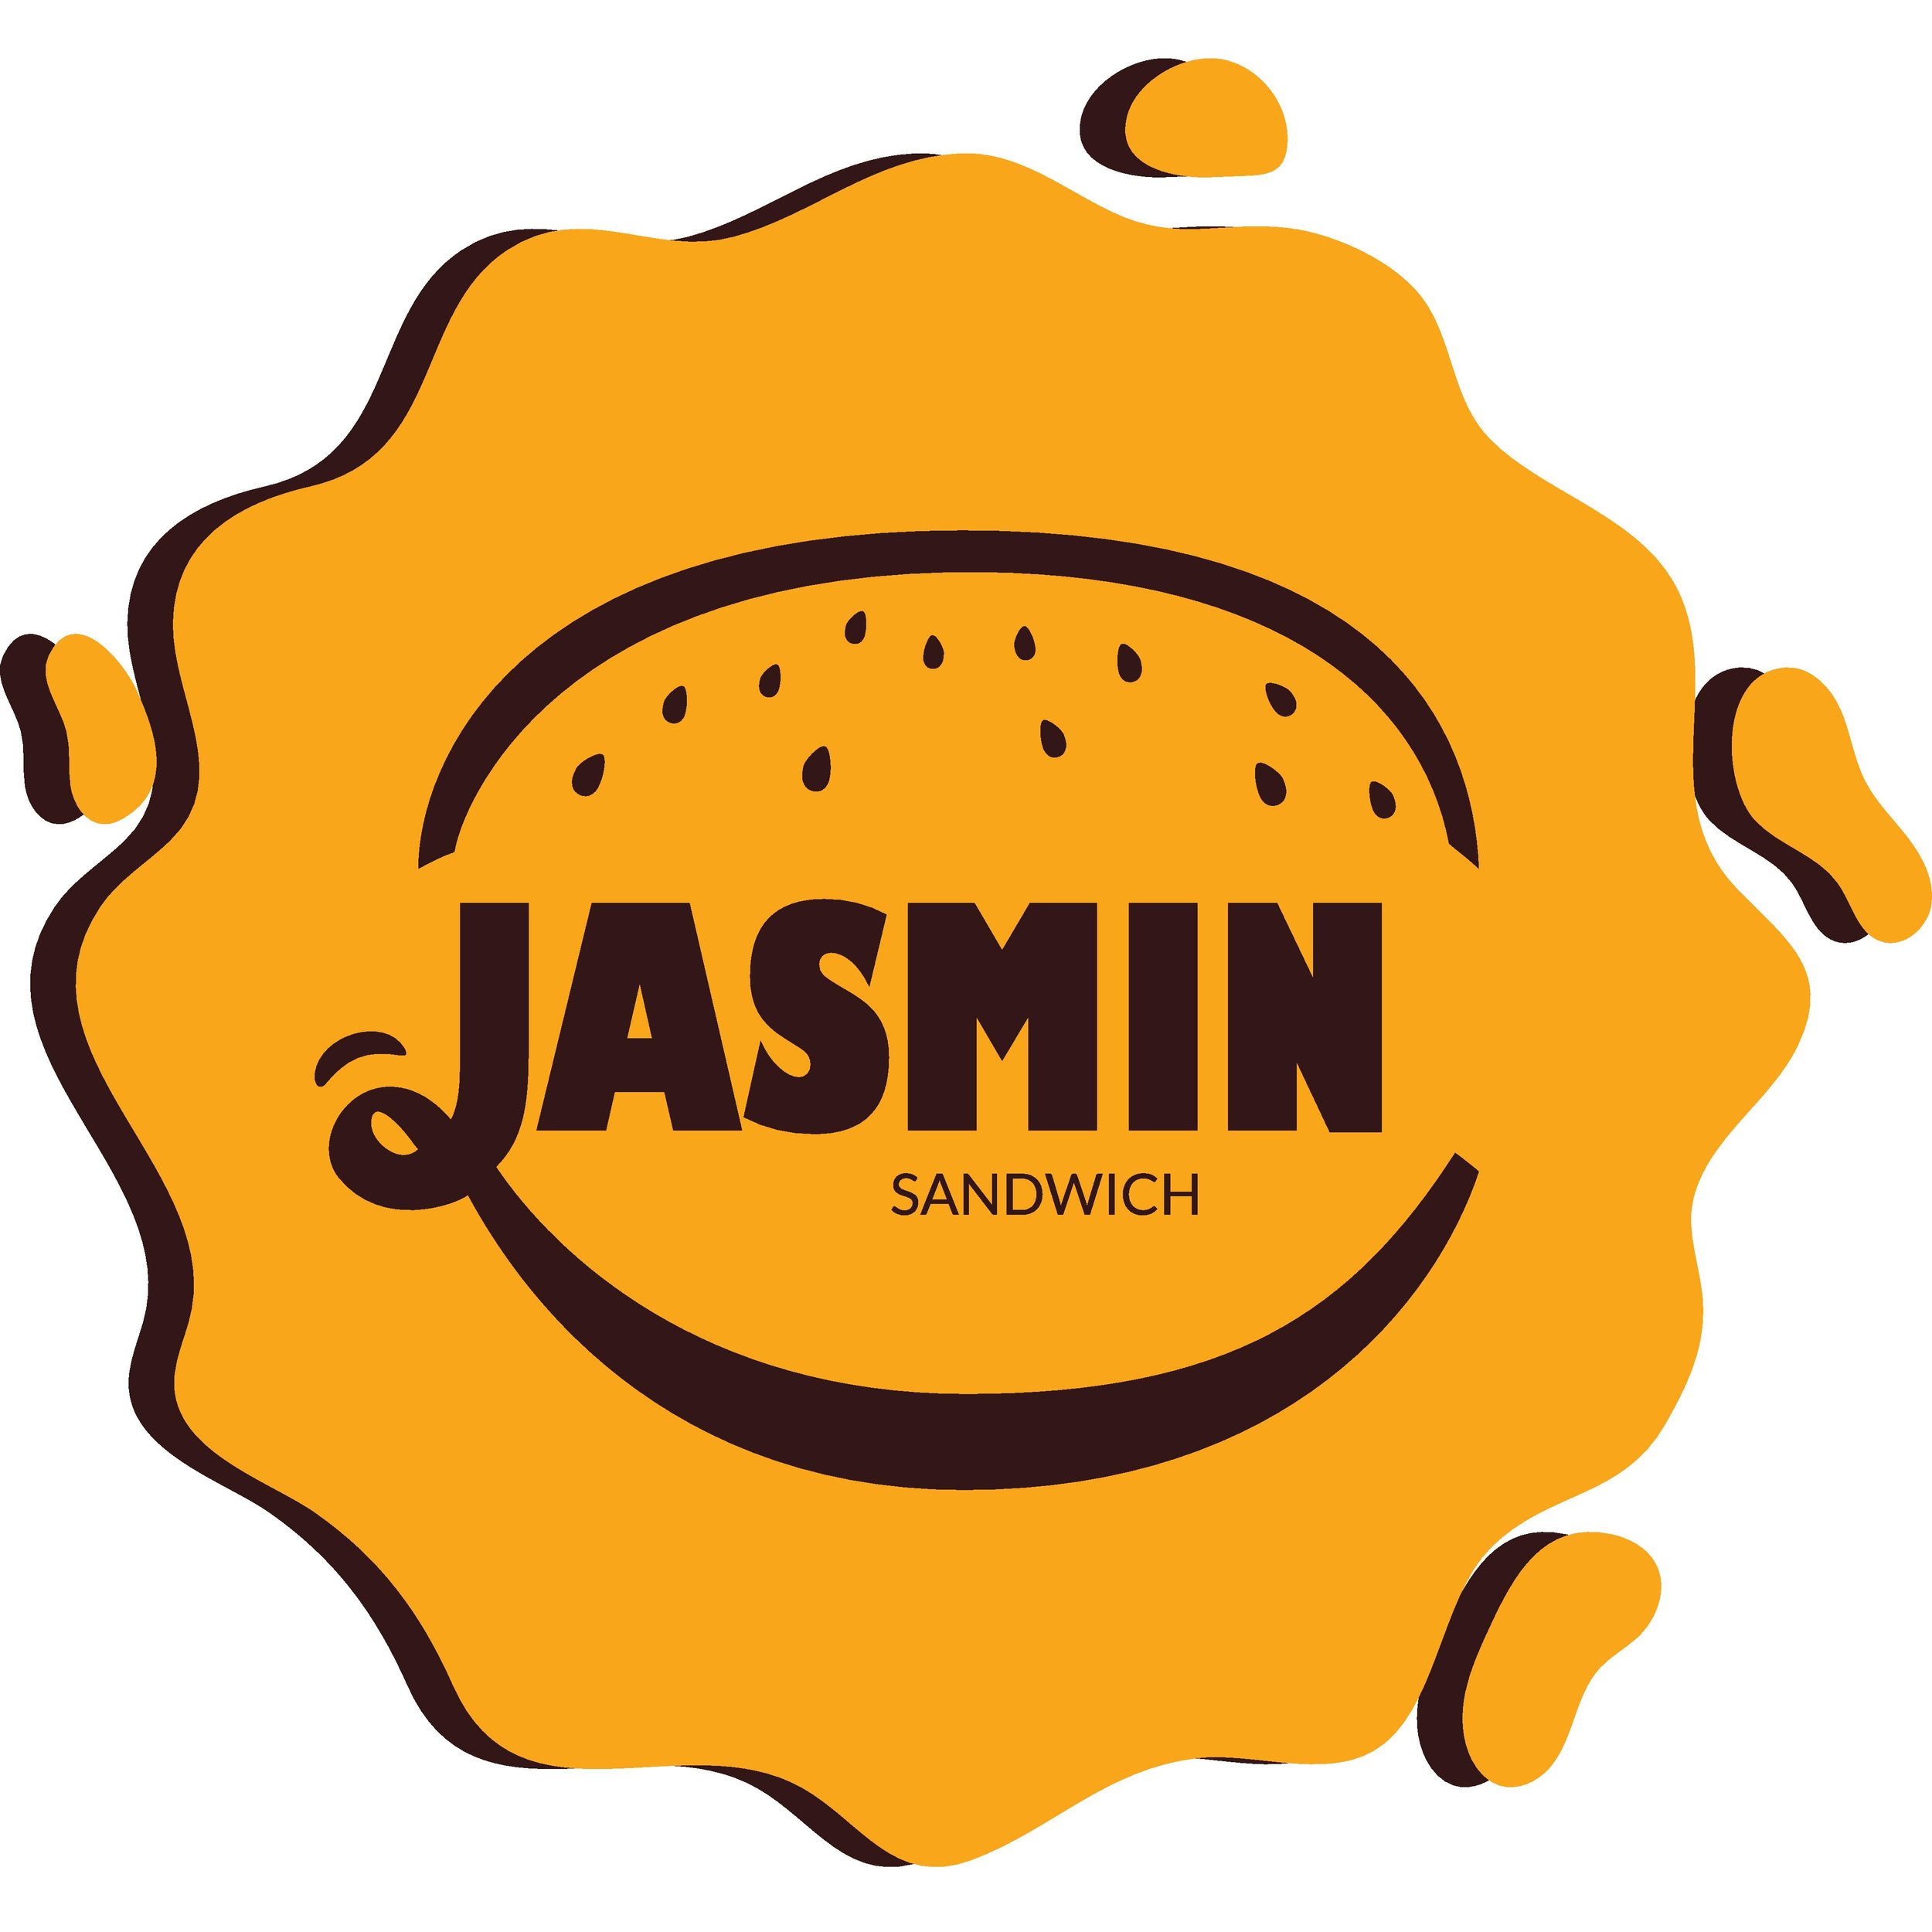 Jasmin Sandwich